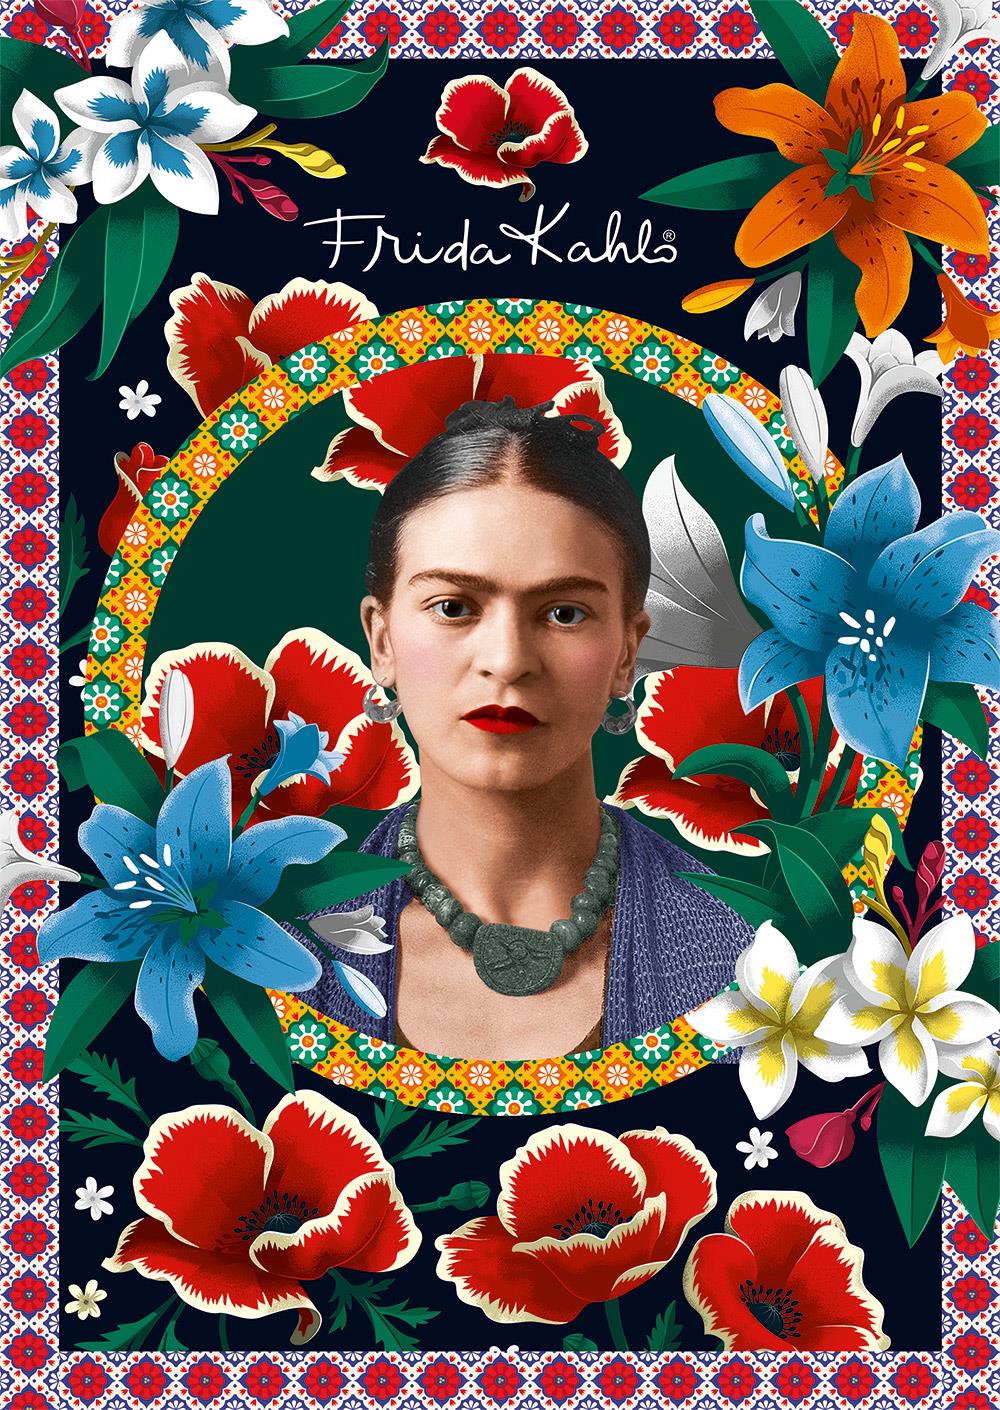 Bluebird Frida Kahlo Jigsaw Puzzle (2000 Pieces)